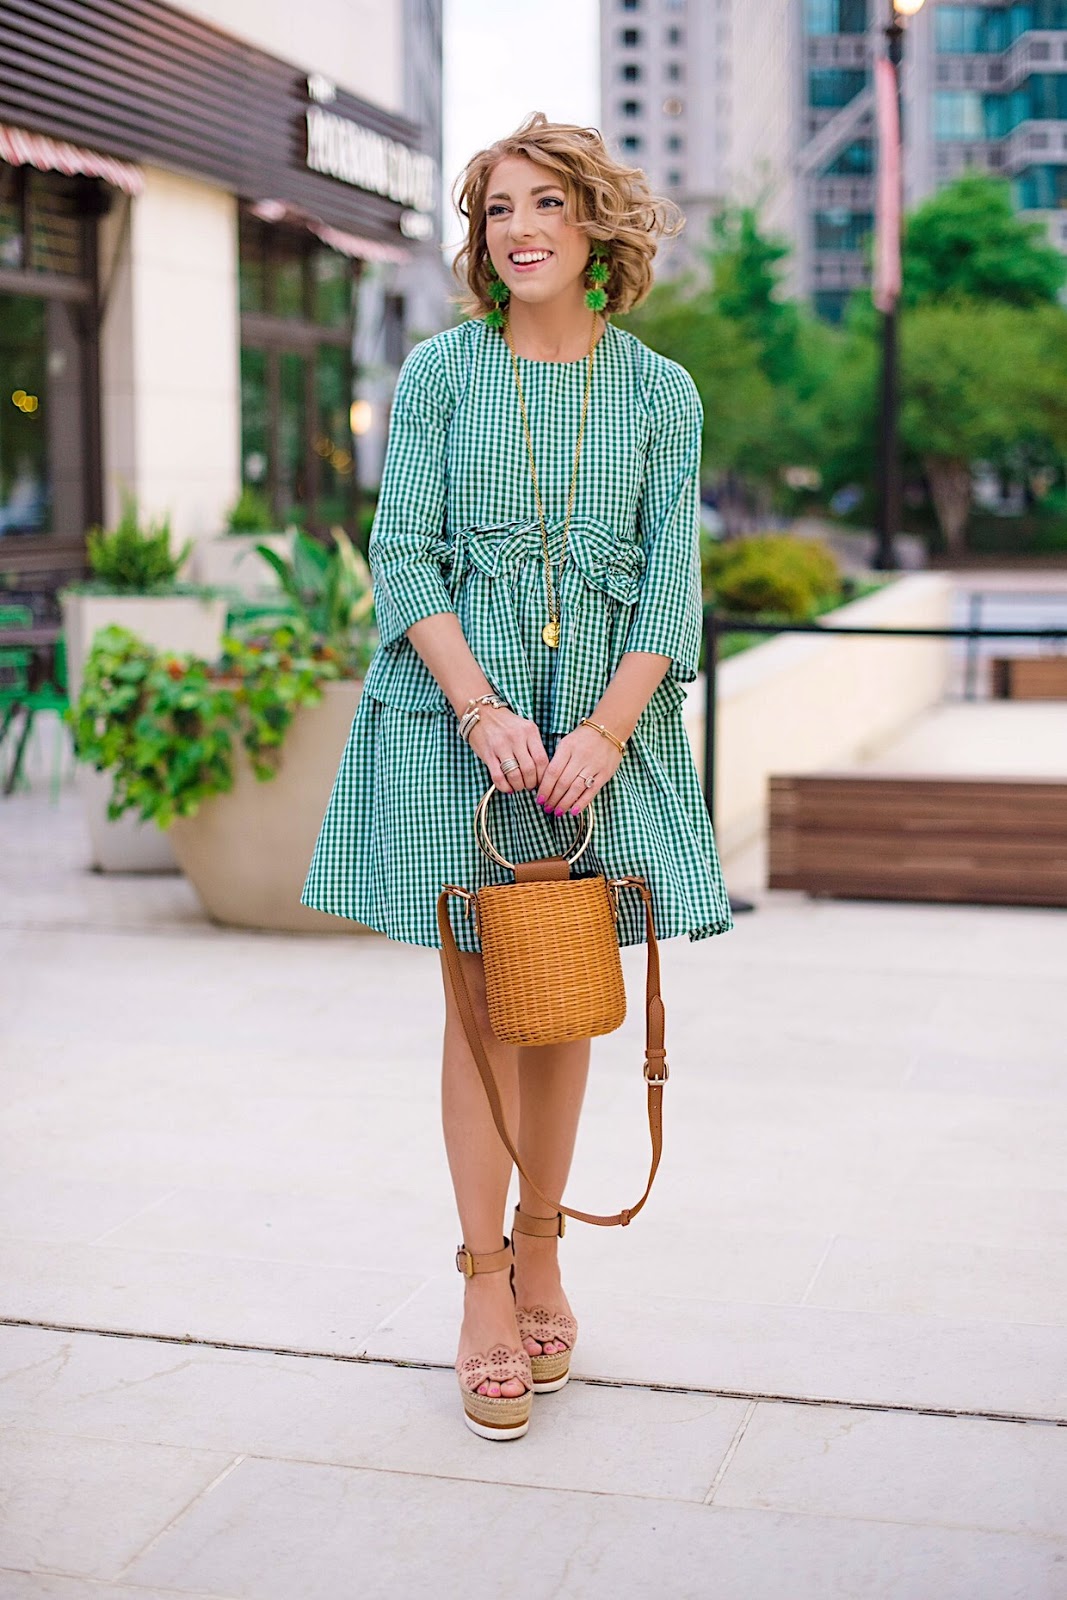 Emerald Green Ruffle Gingham Dress + Wicker Basket Bag - Something Delightful Blog